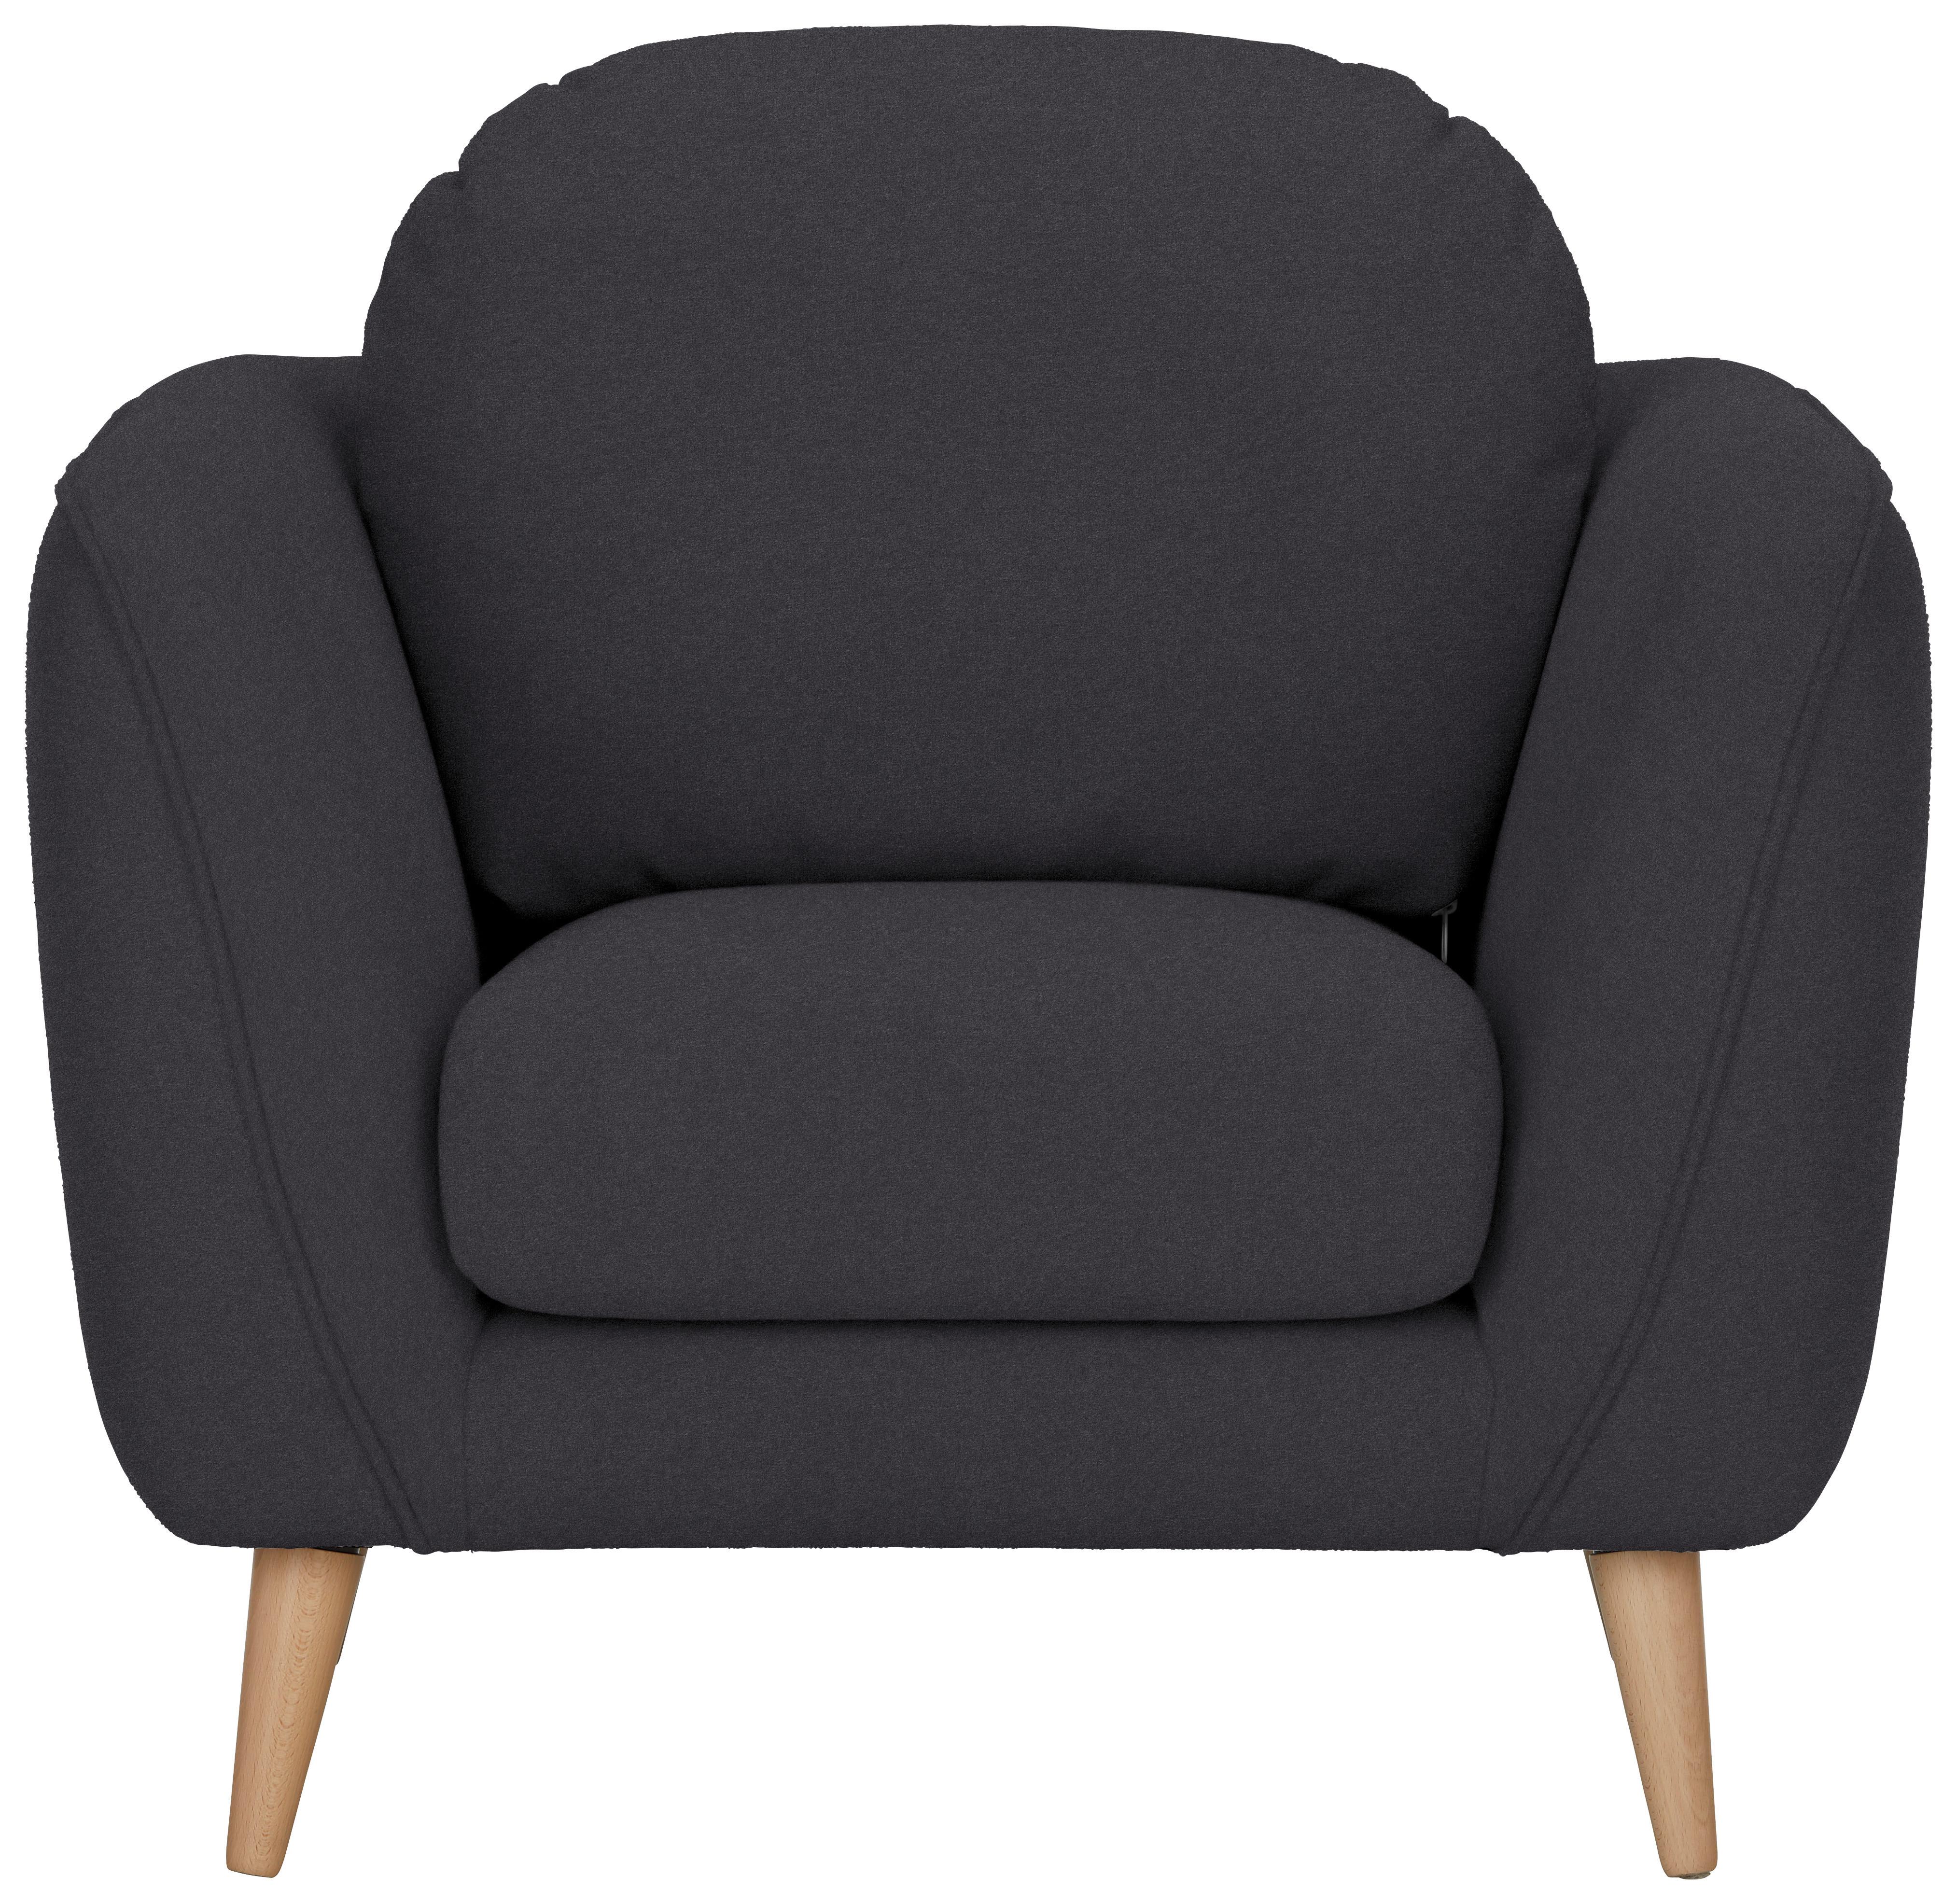 Fotelja Nicolo - siva/prirodne boje, Konventionell, tekstil (98/70/47/97cm) - Zandiara